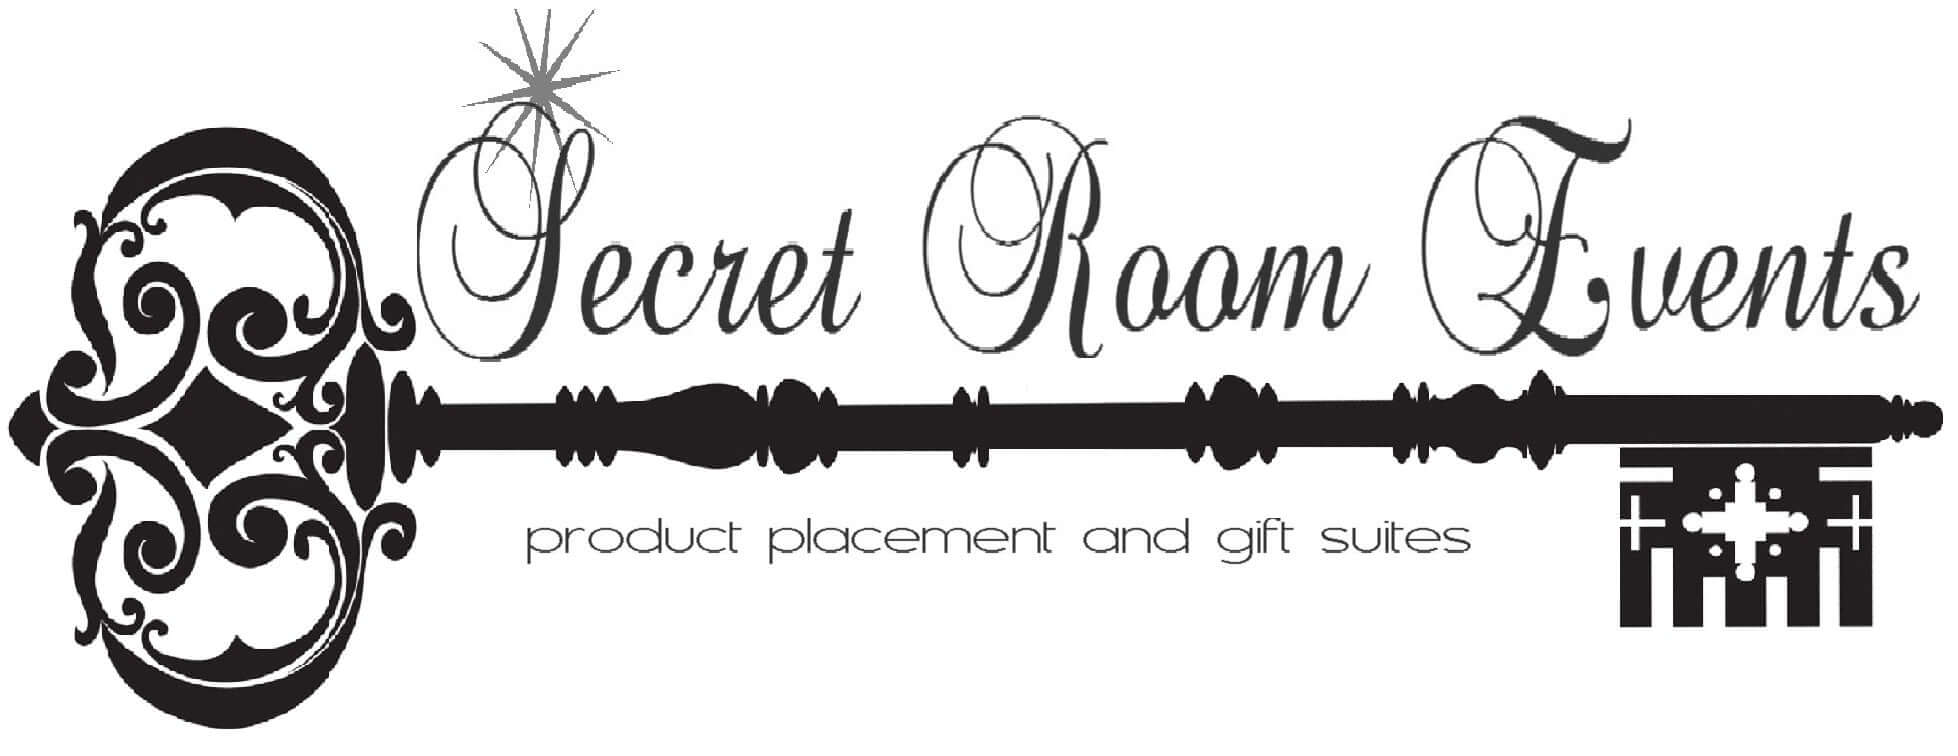 Secret Room Gifting Lounge Logo